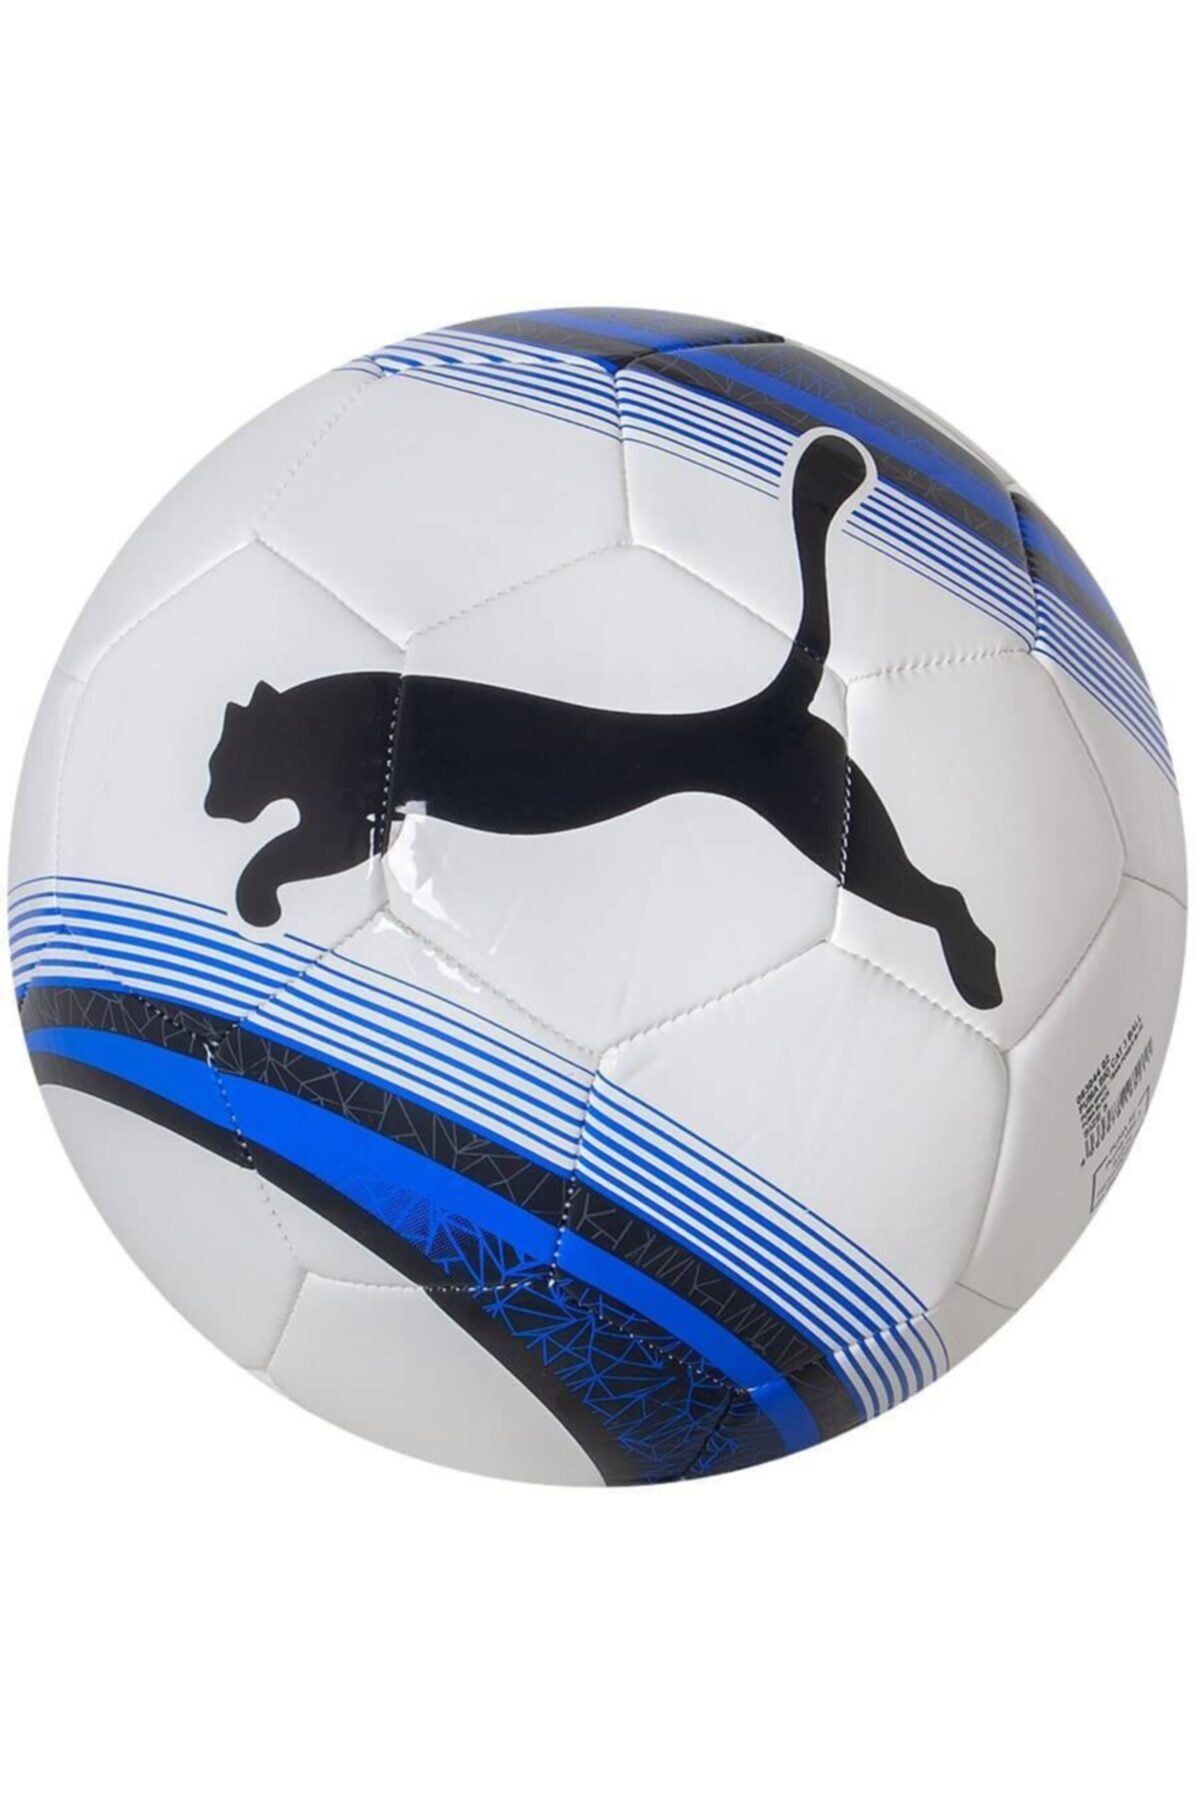 Puma Big Cat 3 Ball